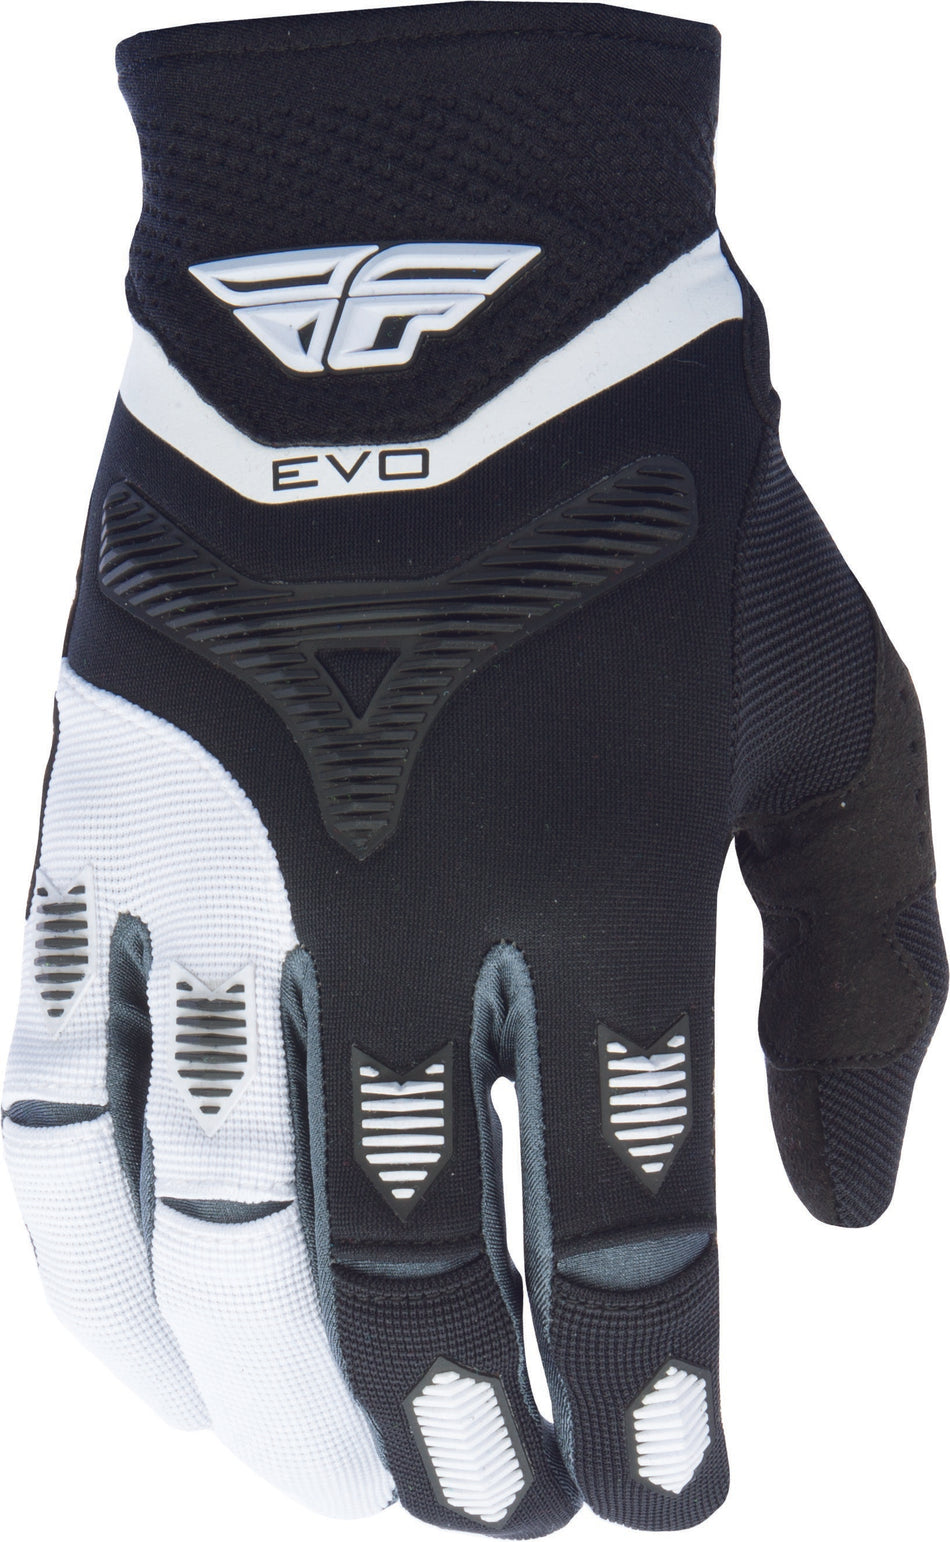 FLY RACING Evo Glove Black/White L 370-11010